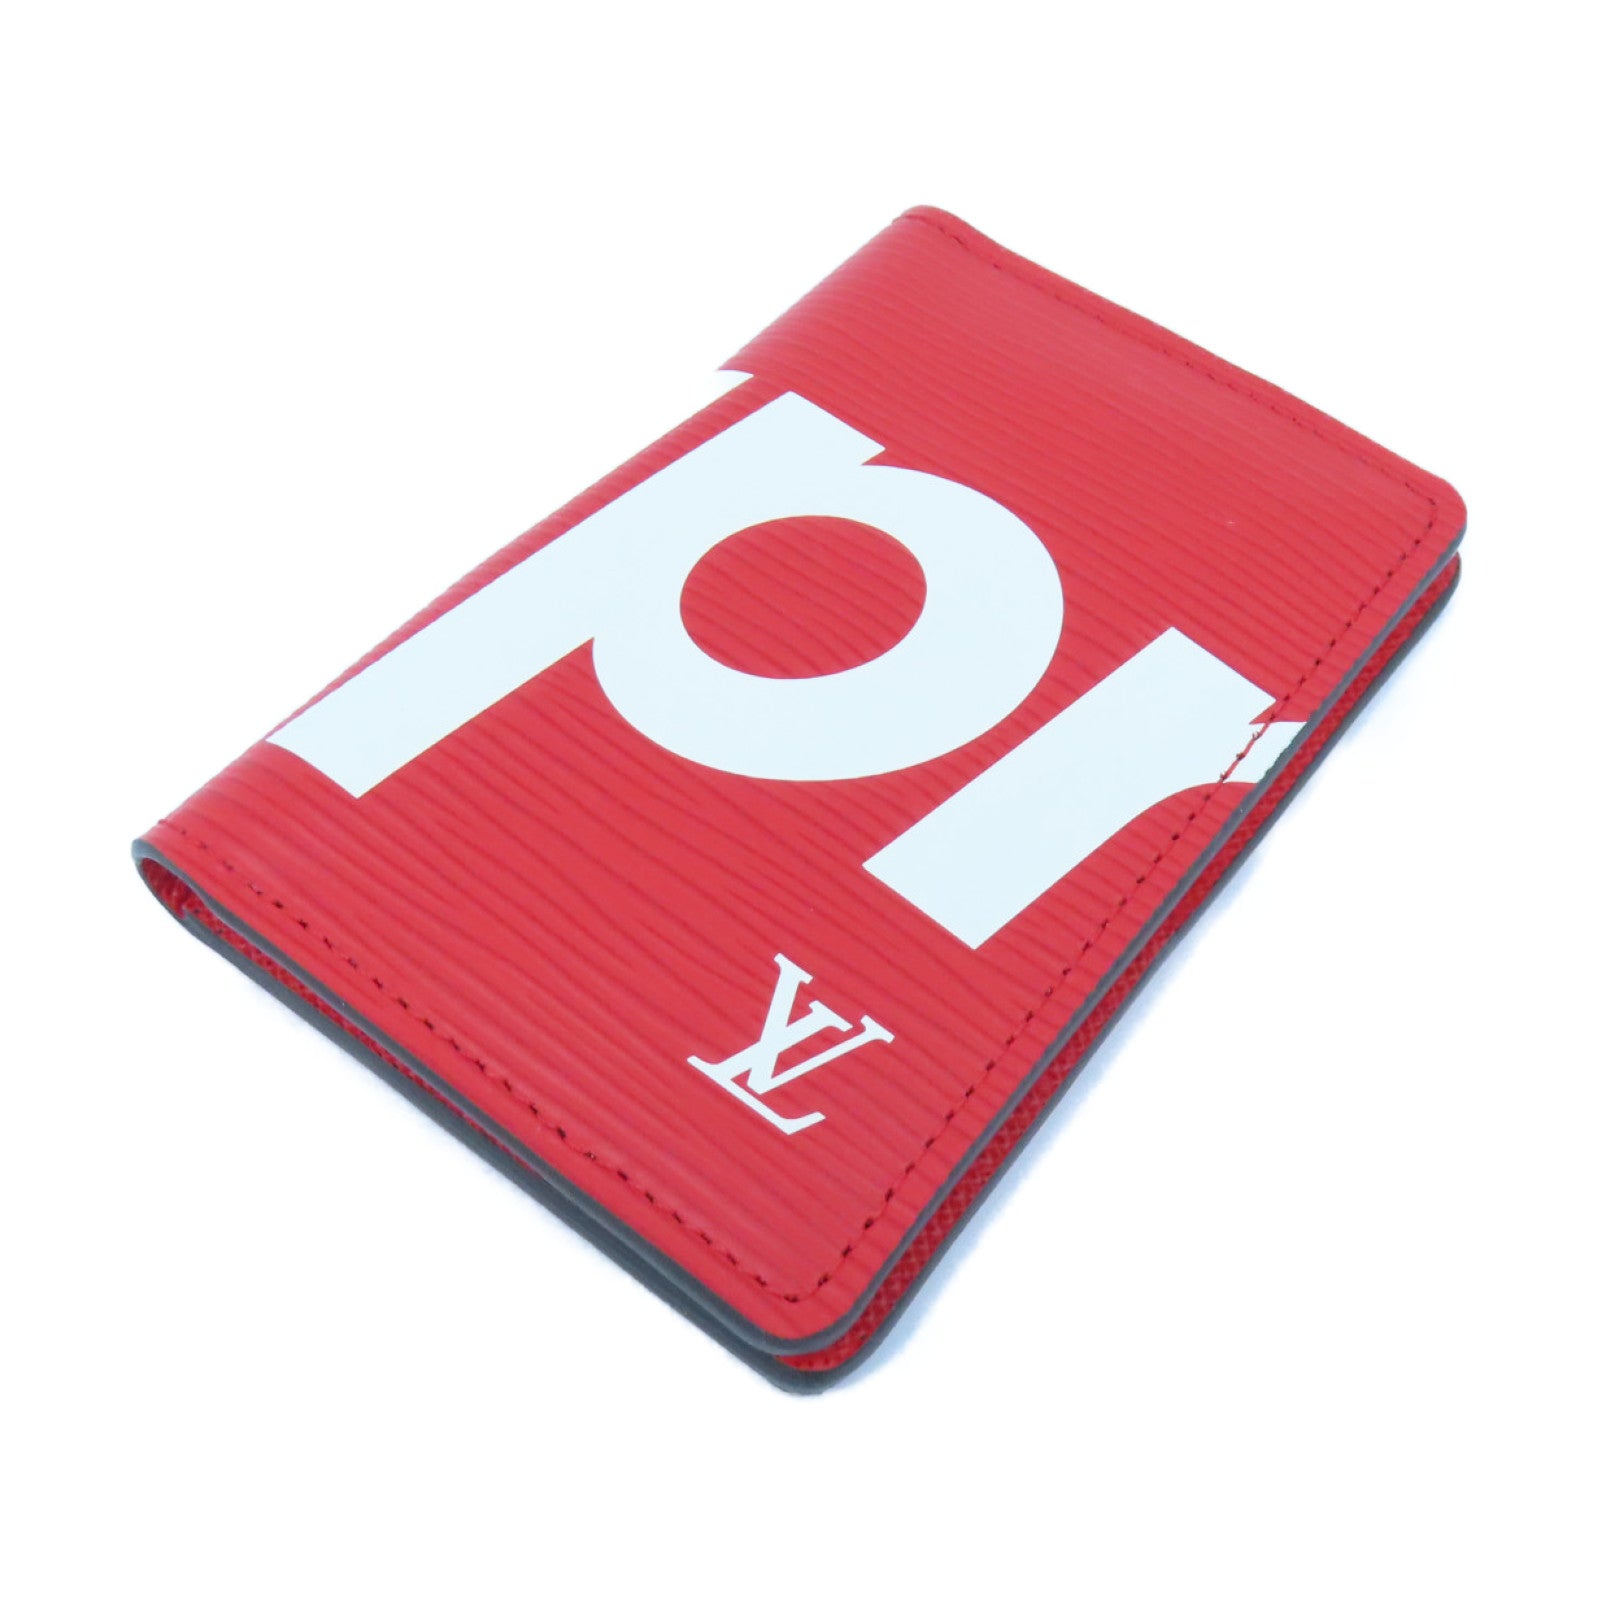 LOUIS VUITTON Epi Supreme Red Pocket Orgaize card holder red